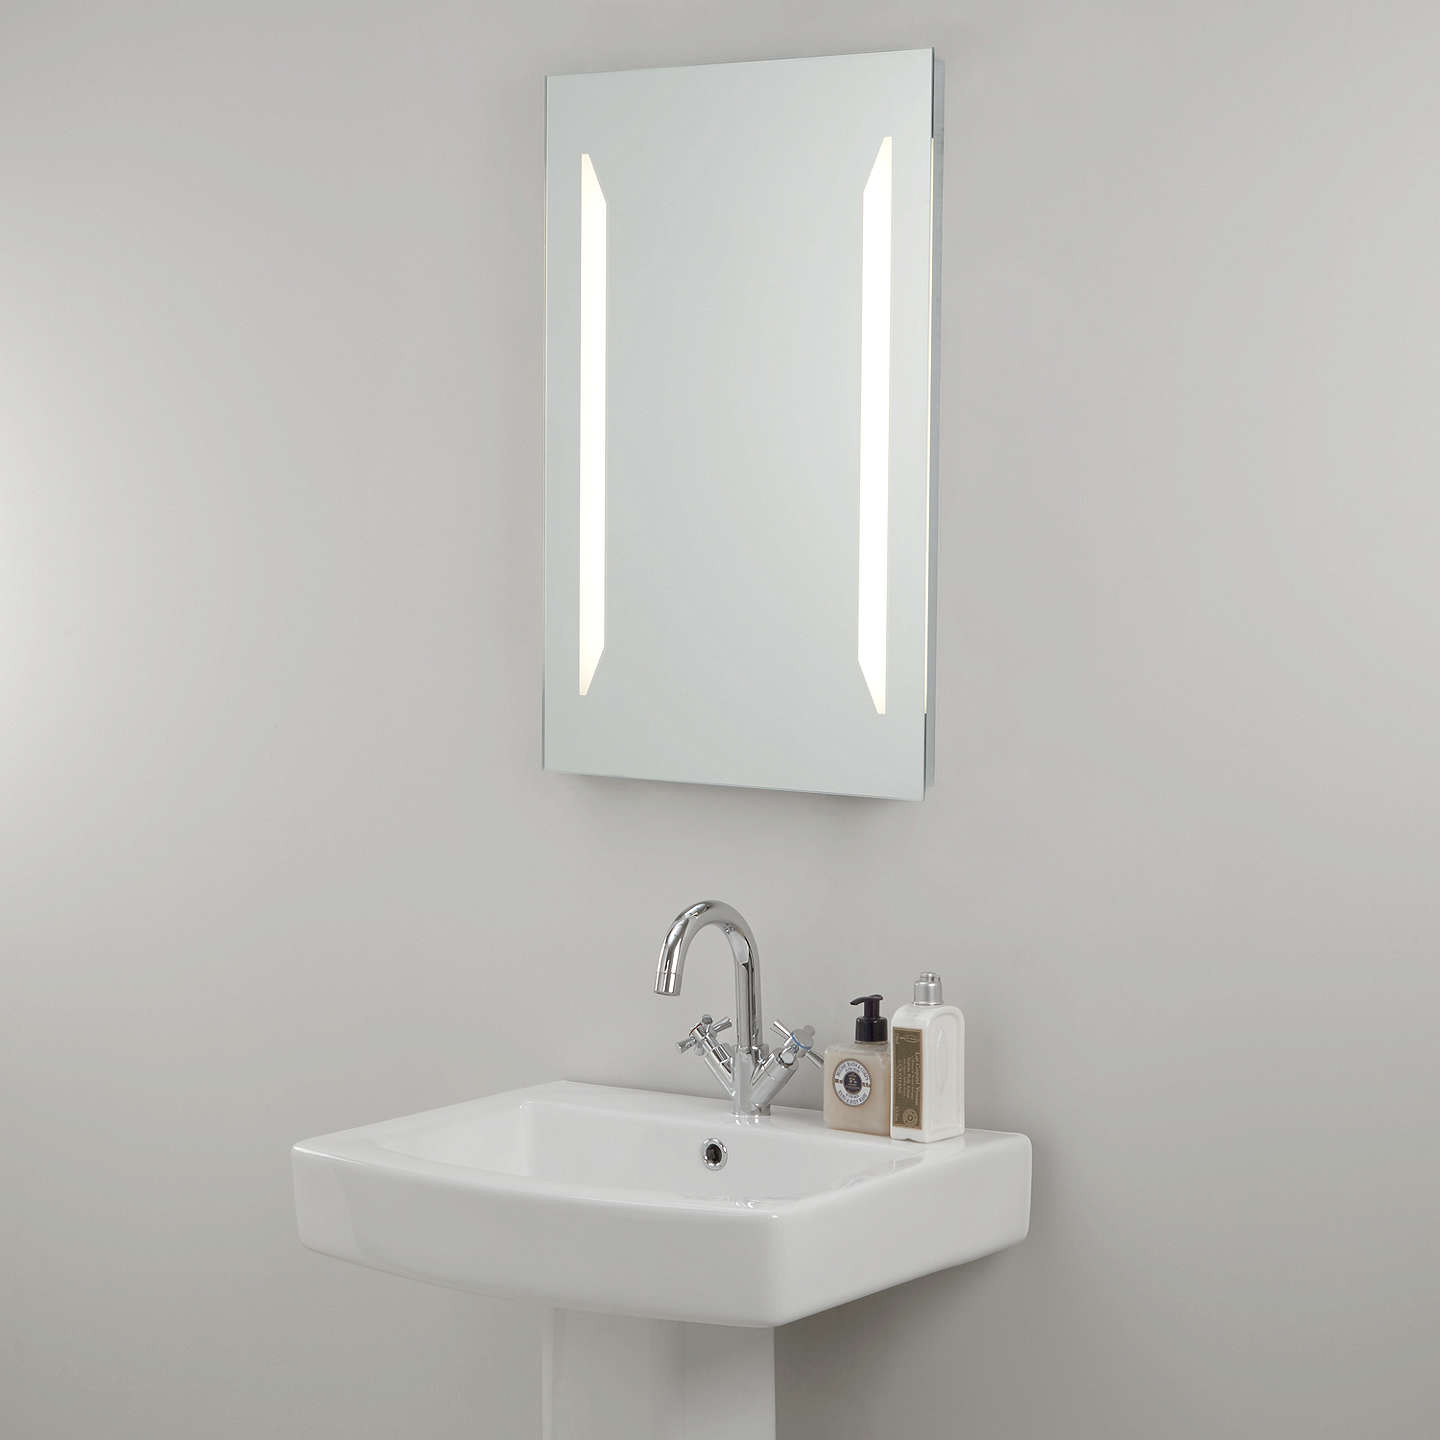 Bathroom Mirrors Online
 John Lewis LED Frost Illuminated Bathroom Mirror at John Lewis